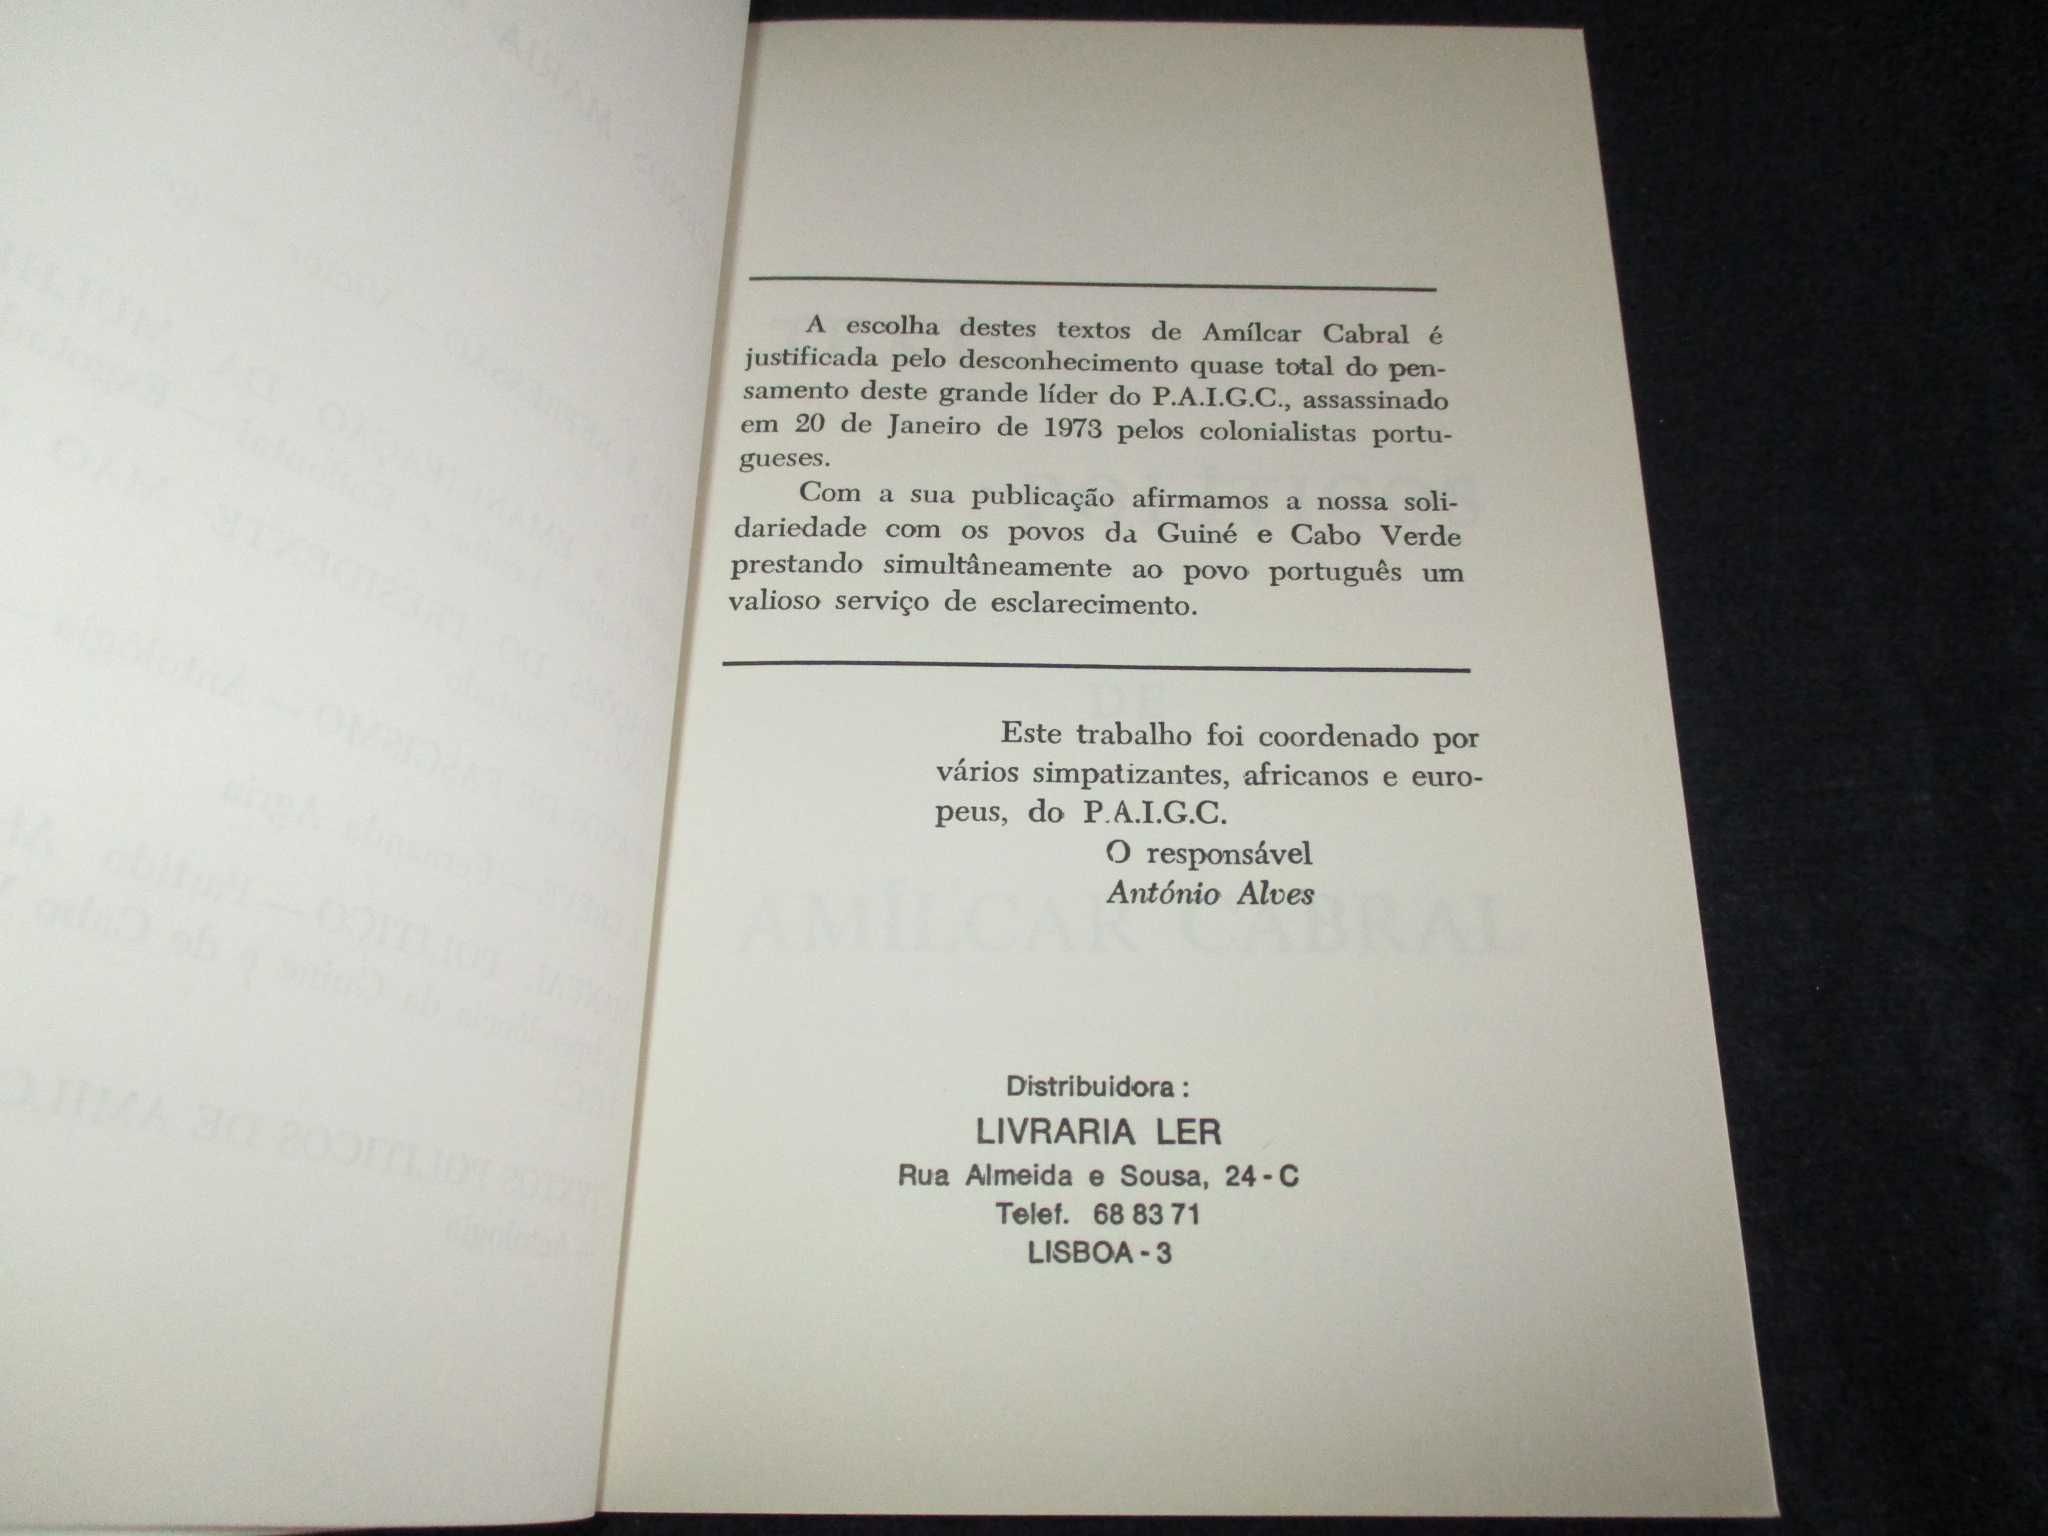 Livro Textos Políticos de Amílcar Cabral 1974